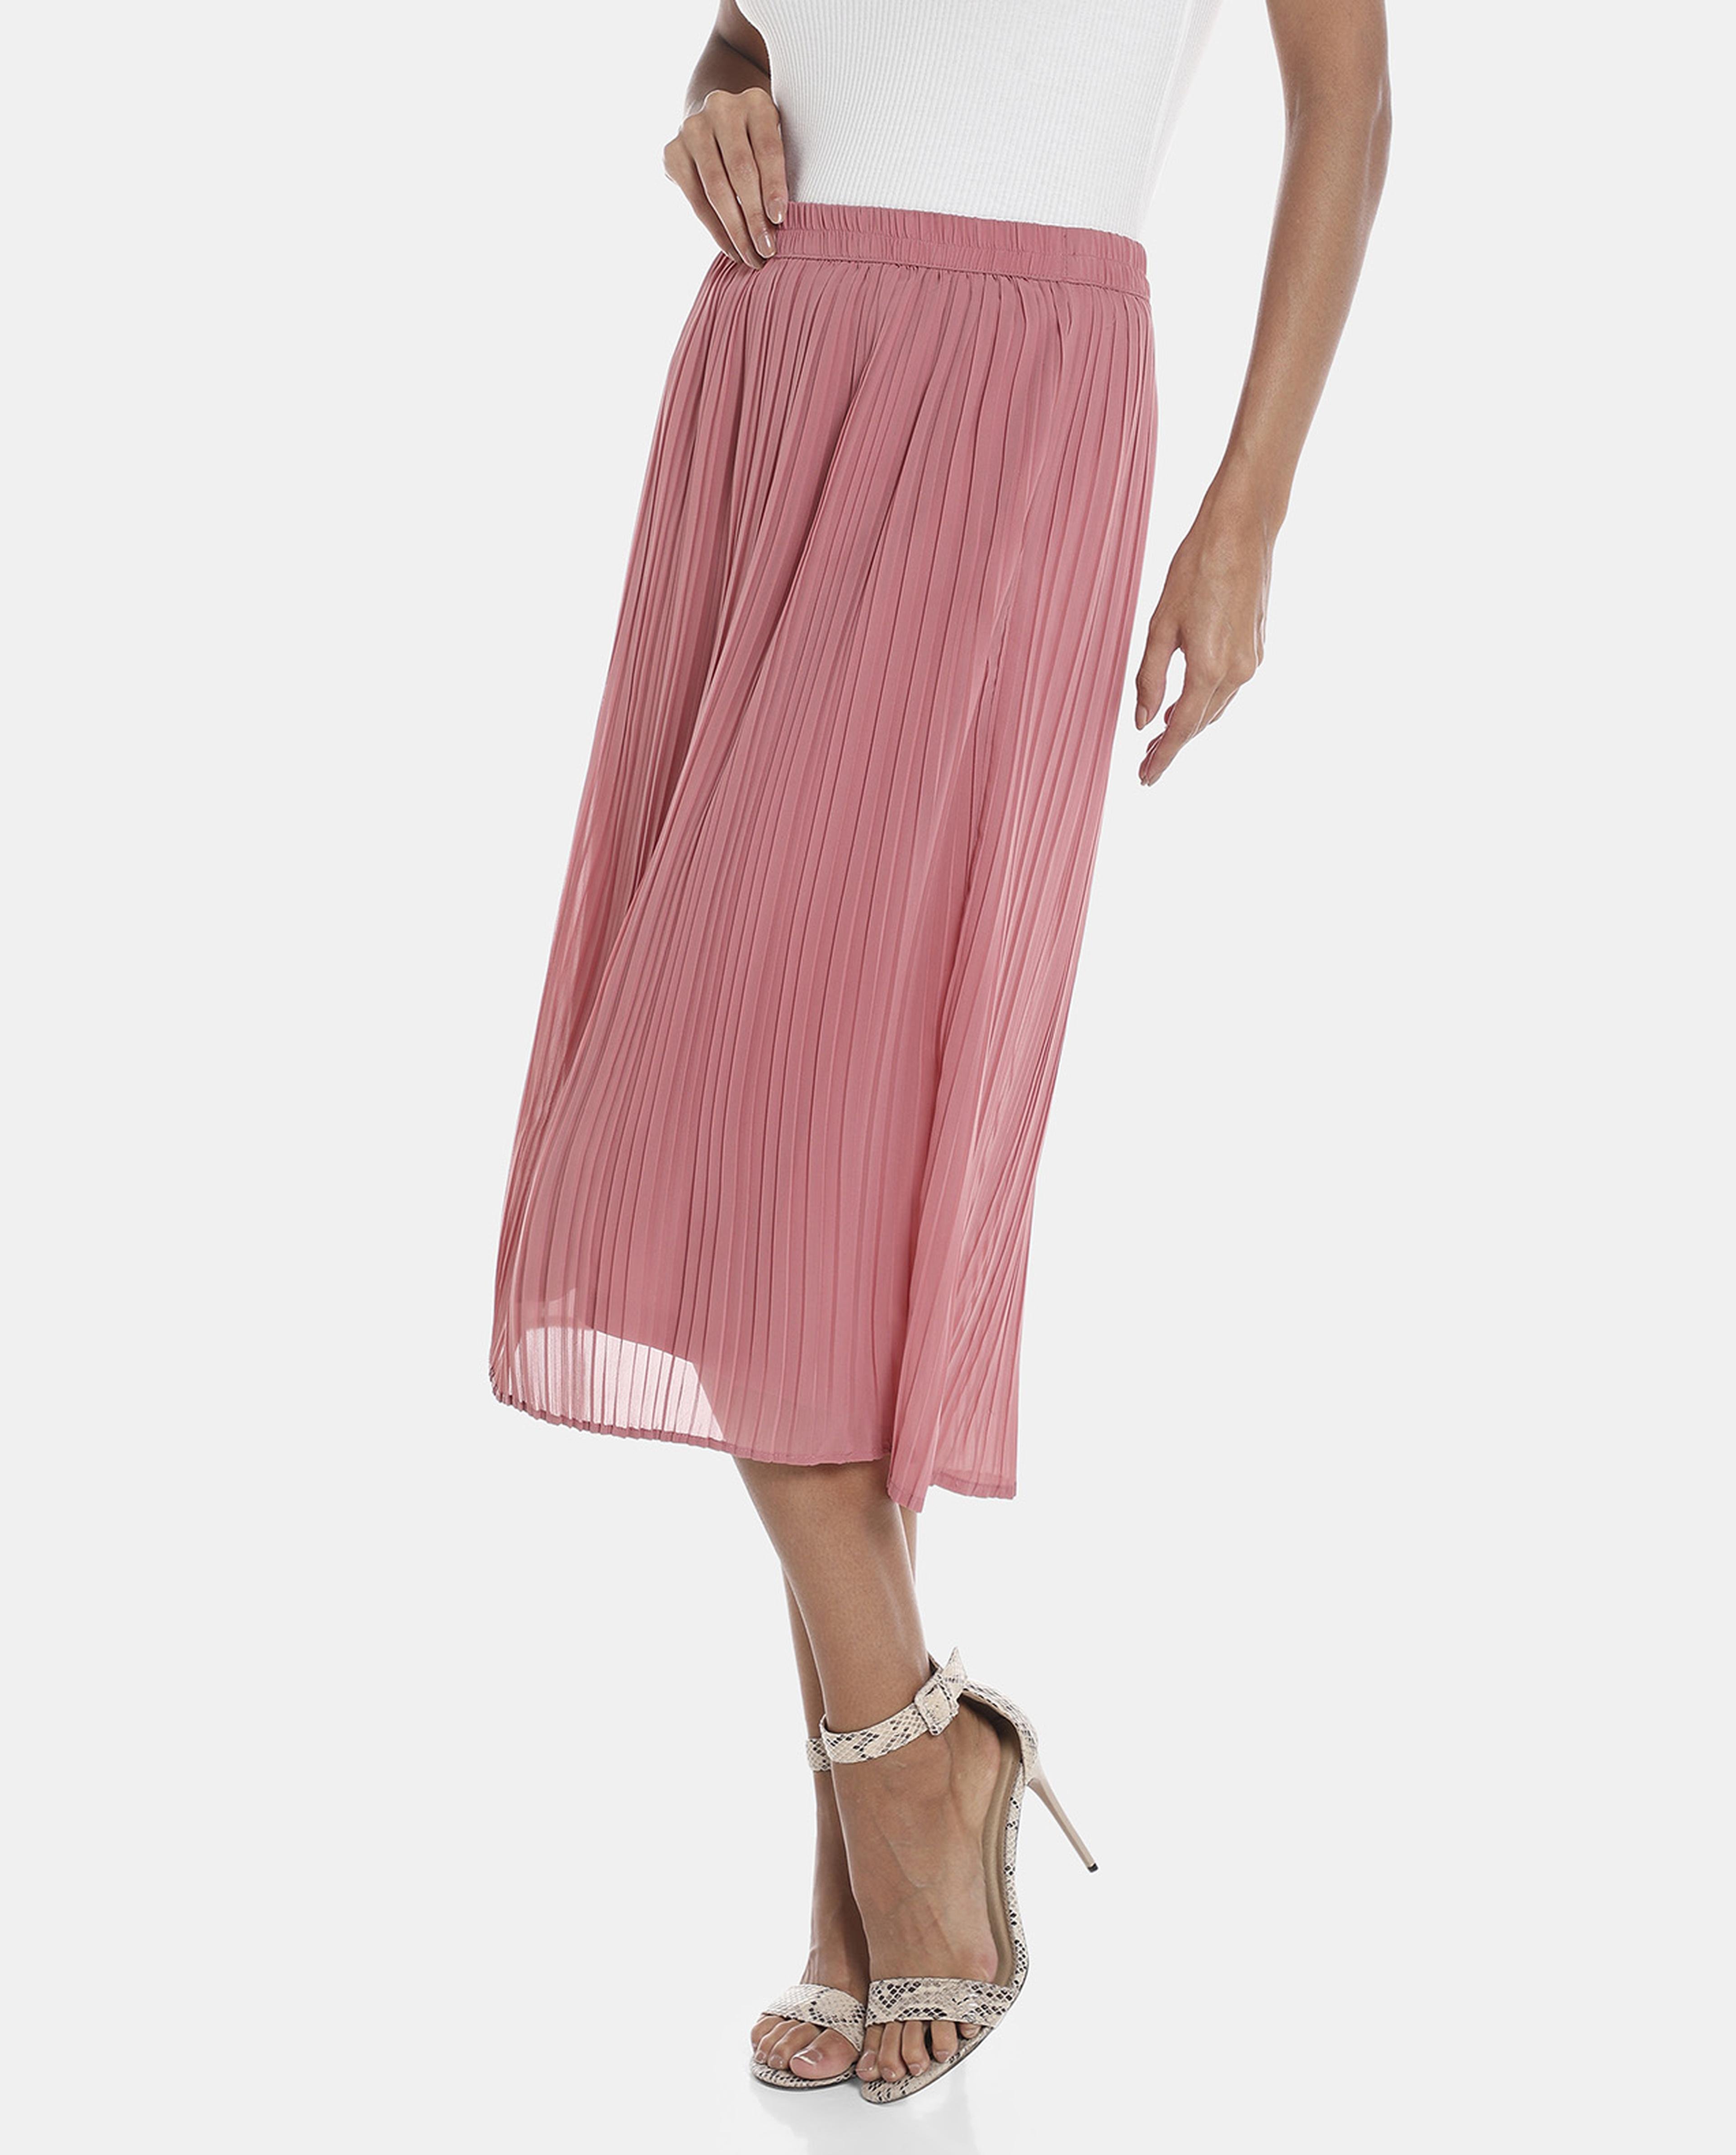 R&B Pink Solid Accordian Pleated Midi Skirt